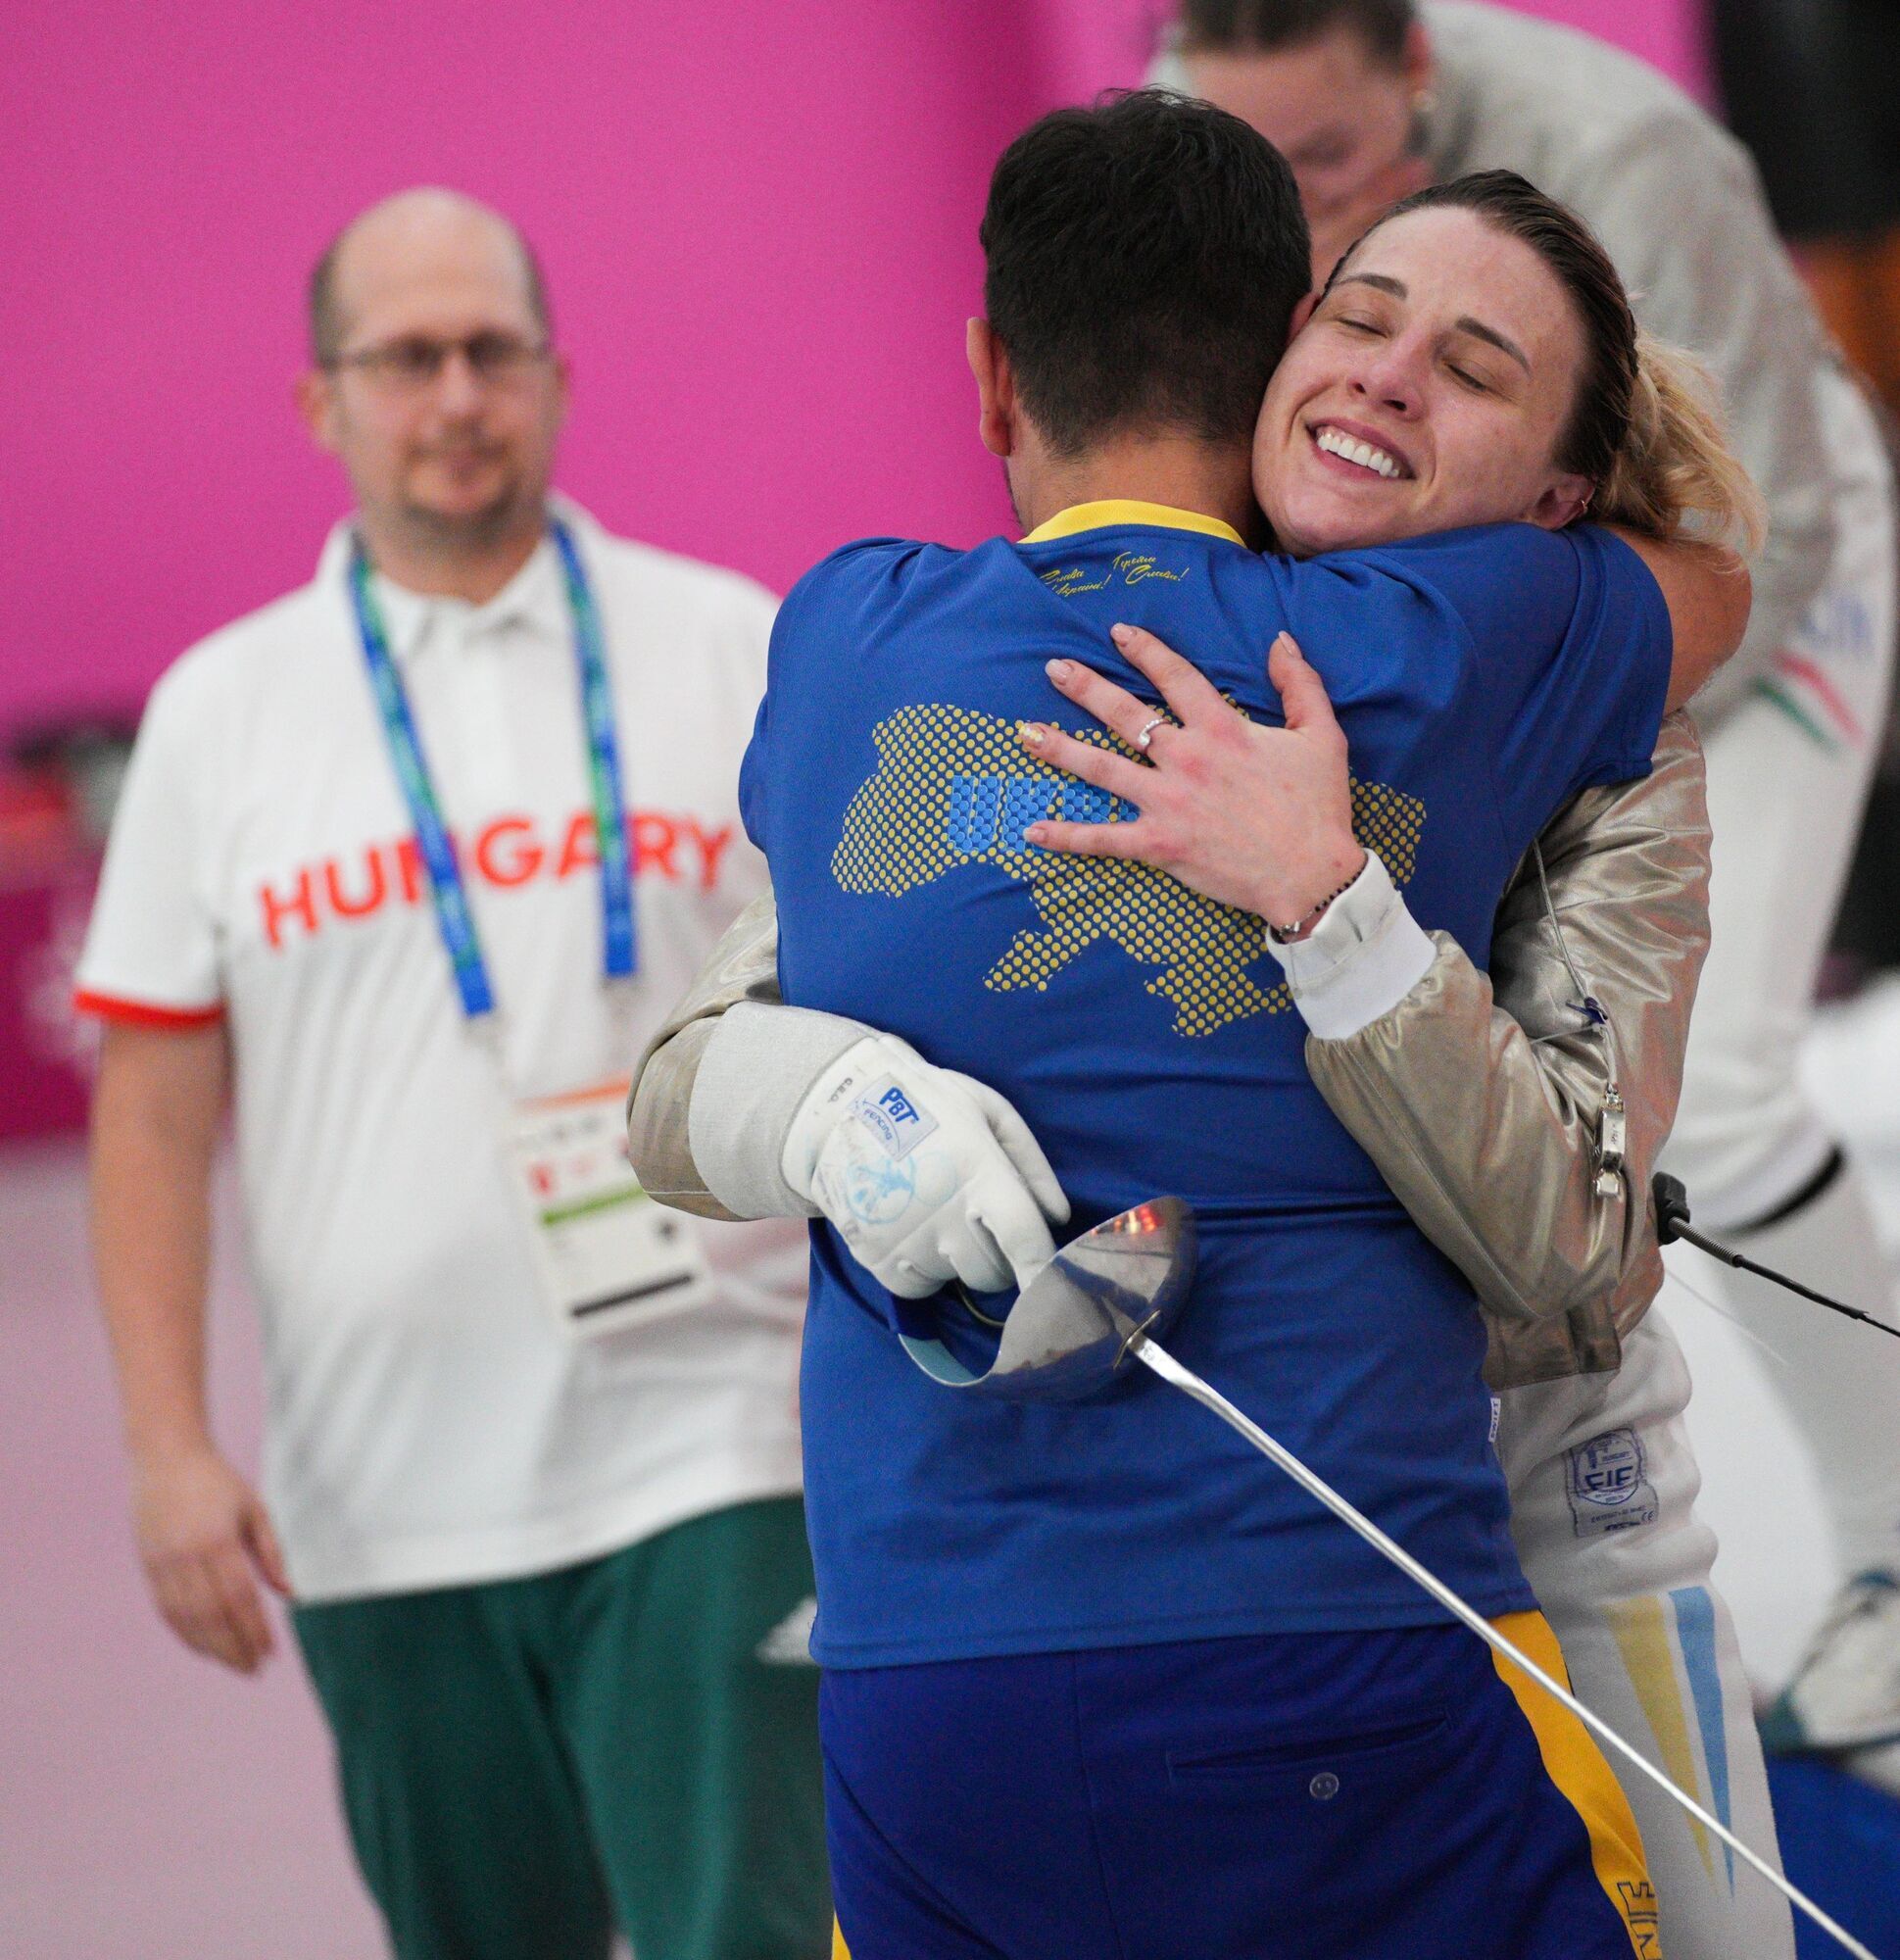 Ukrainian Olha Kharlan wins gold at Fencing World Cup